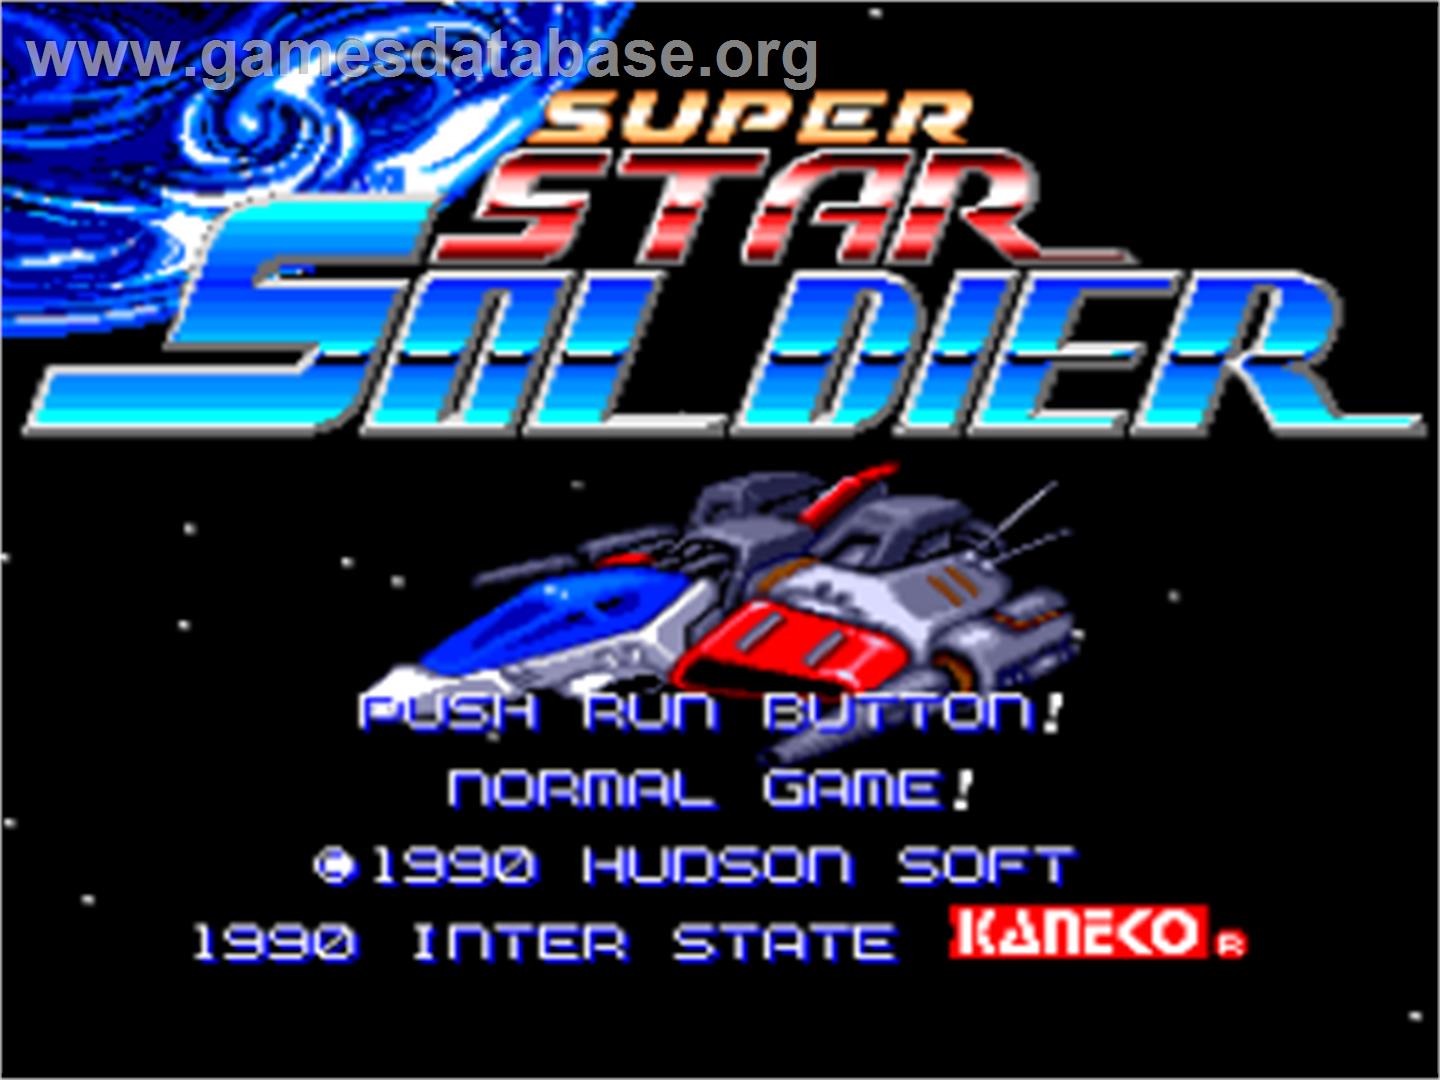 Super Star Soldier - NEC PC Engine - Artwork - Title Screen